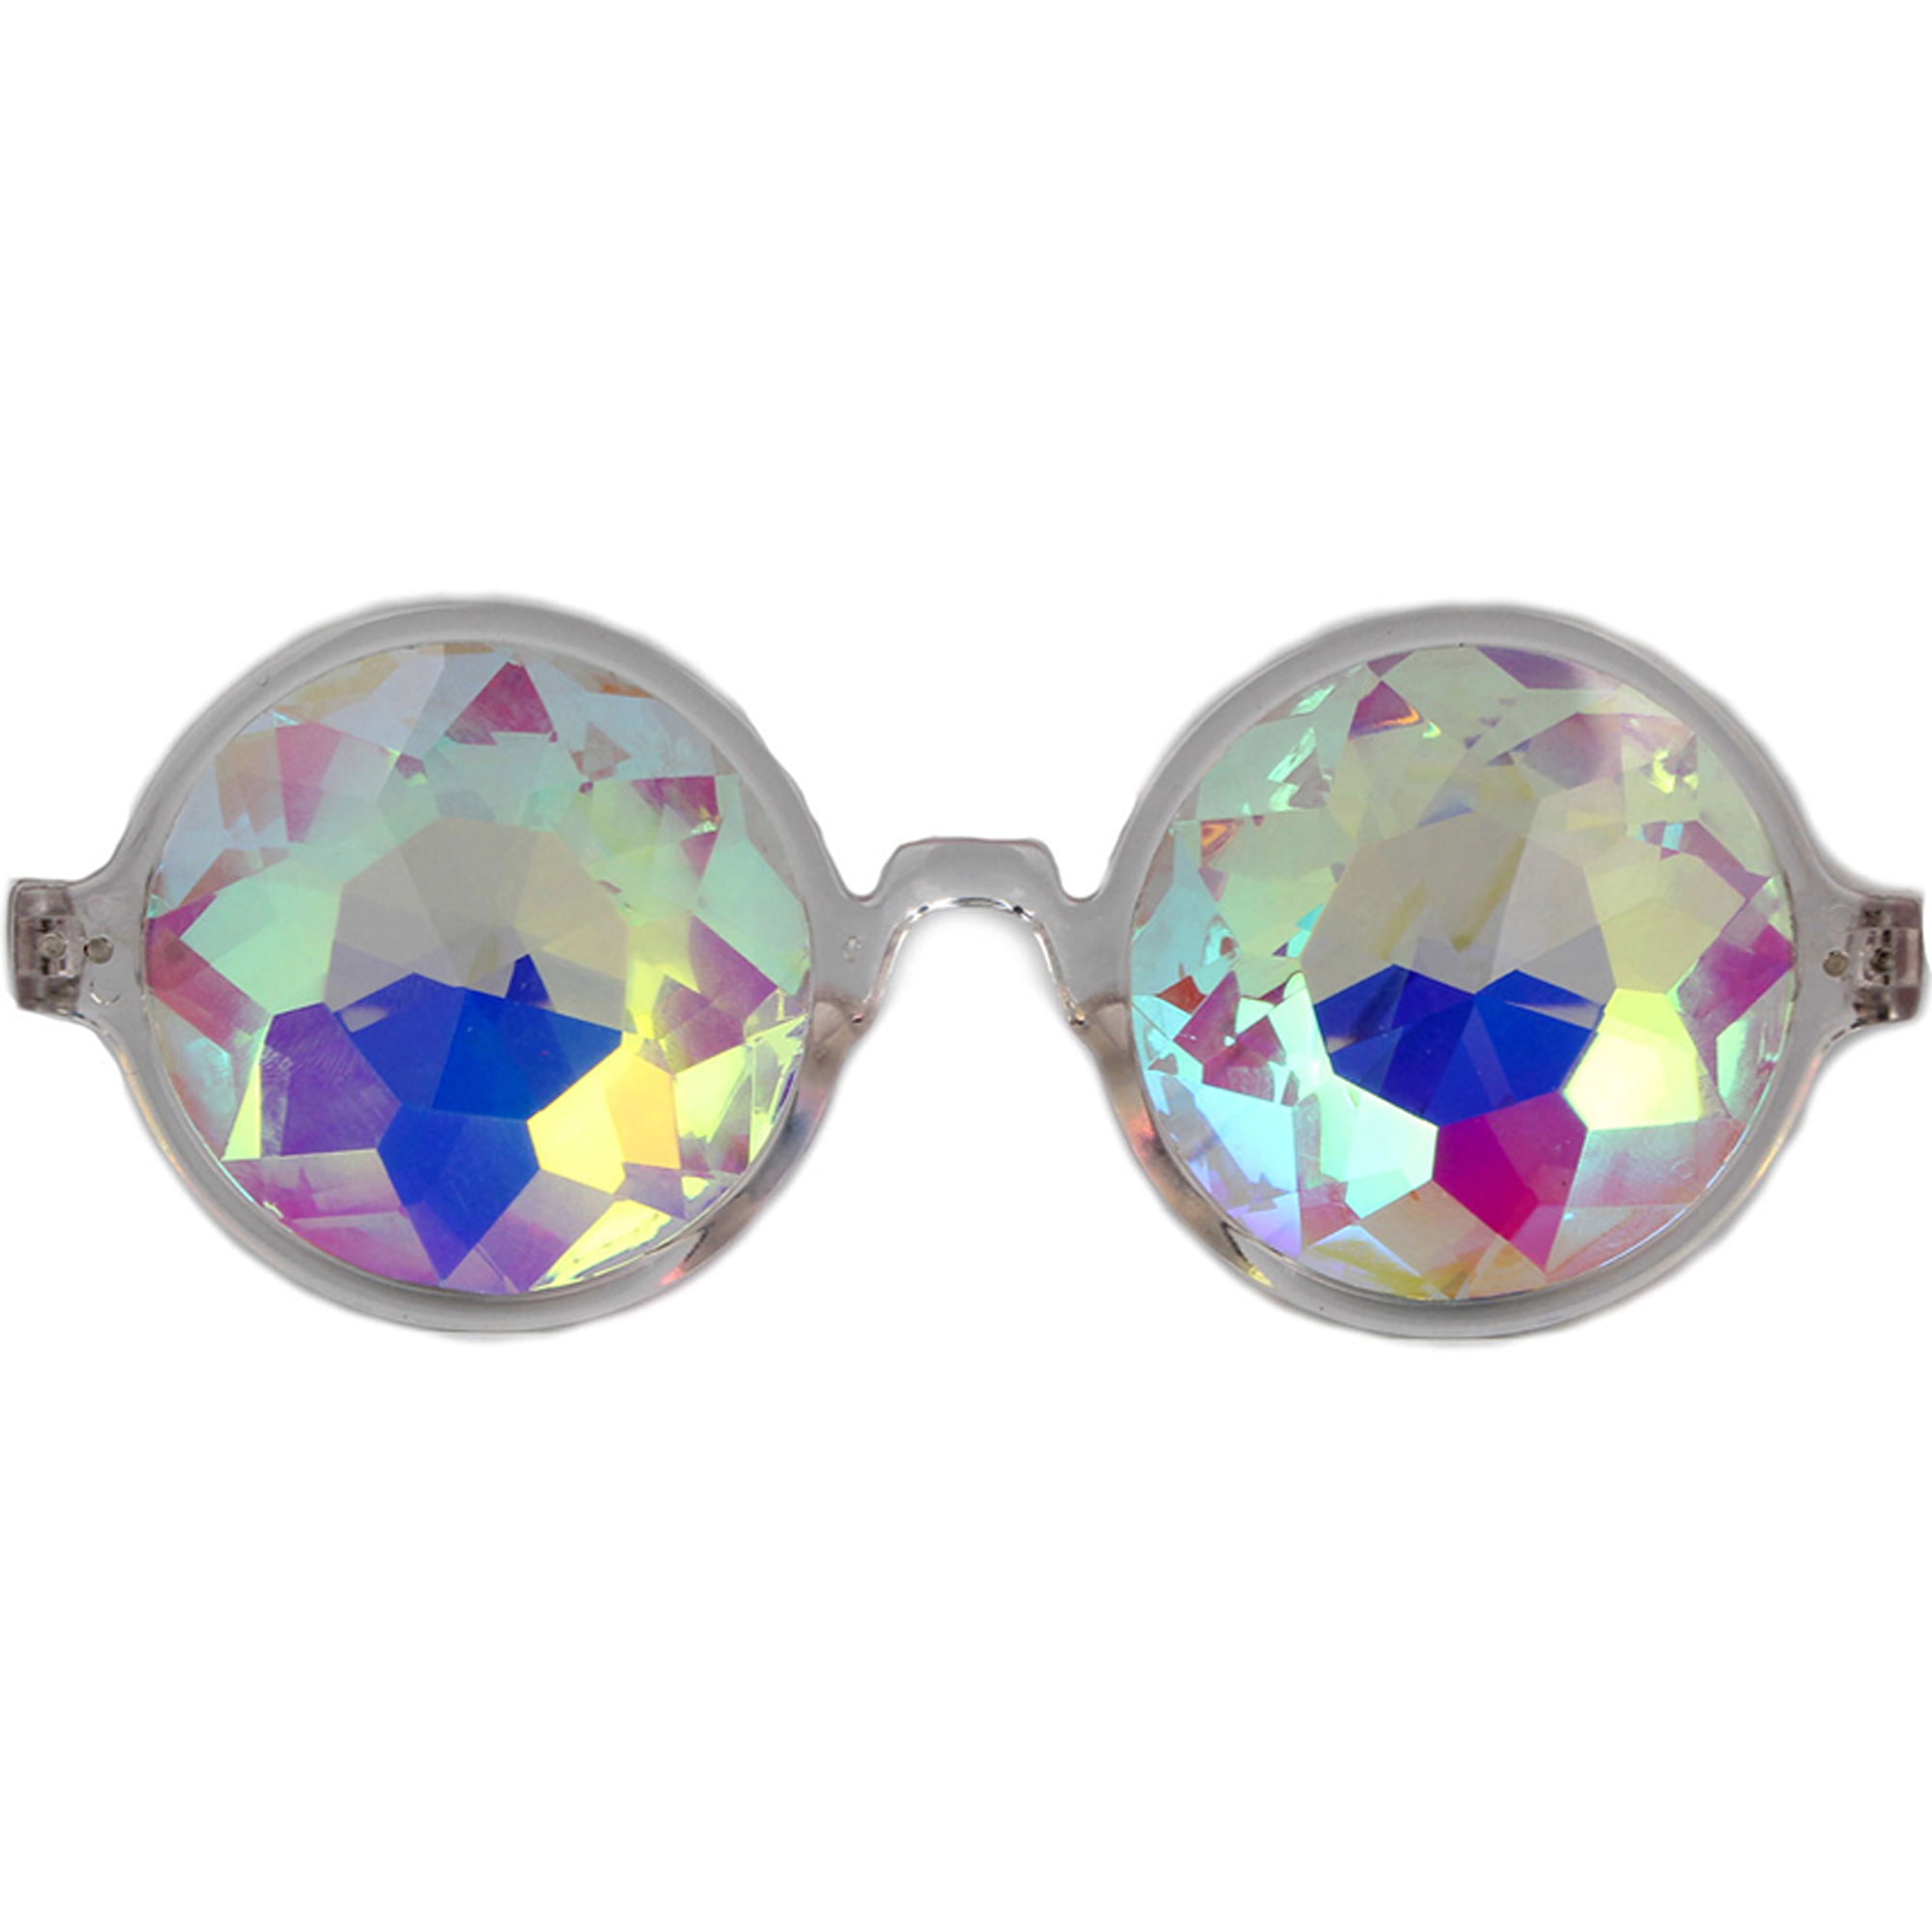 Festivals Kaleidoscope Rave Glasses Crystal Prism Sunglasses Steampunk Goggles 